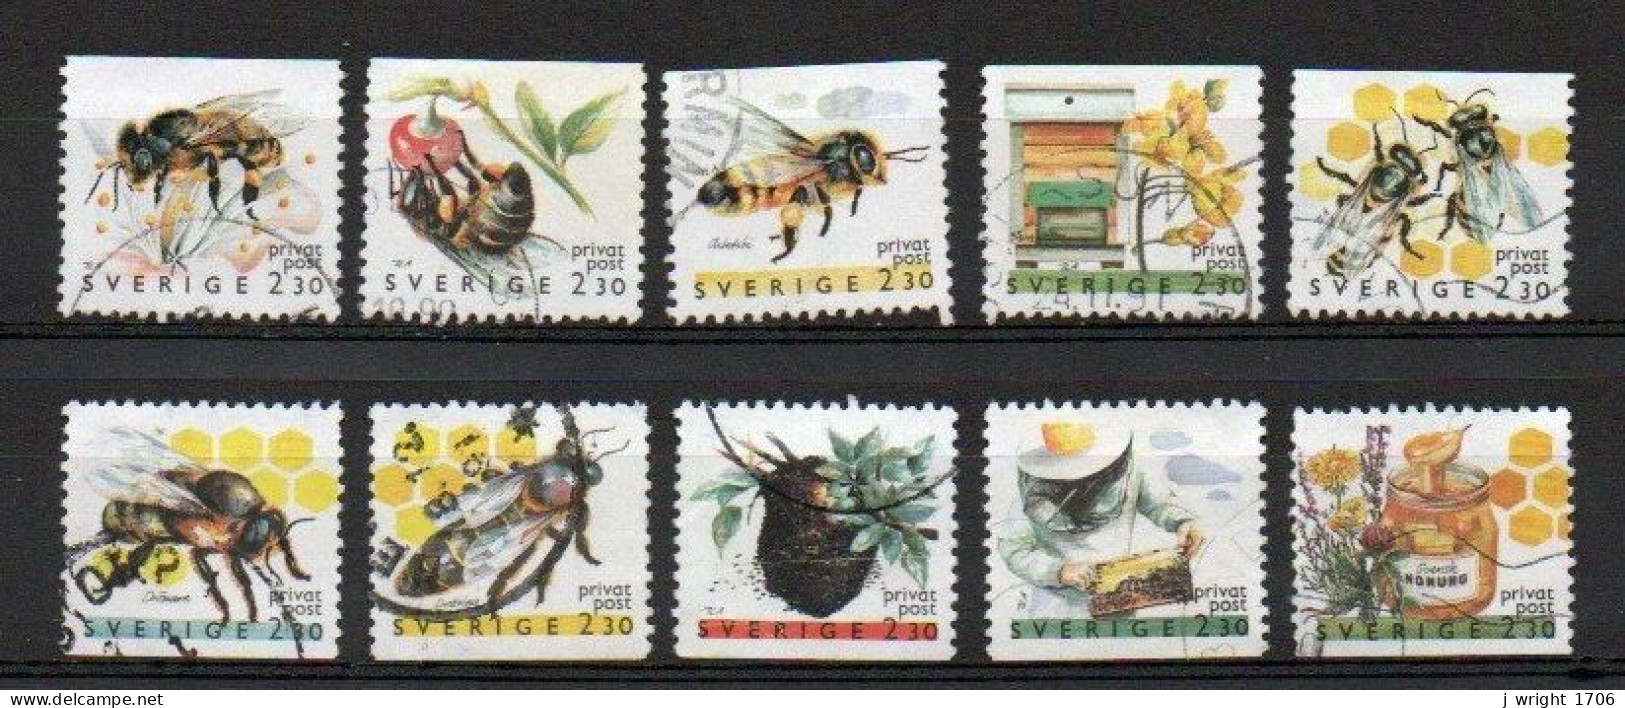 Sweden, 1990, Rebate Stamps/Honey Bees, Set, USED - Used Stamps